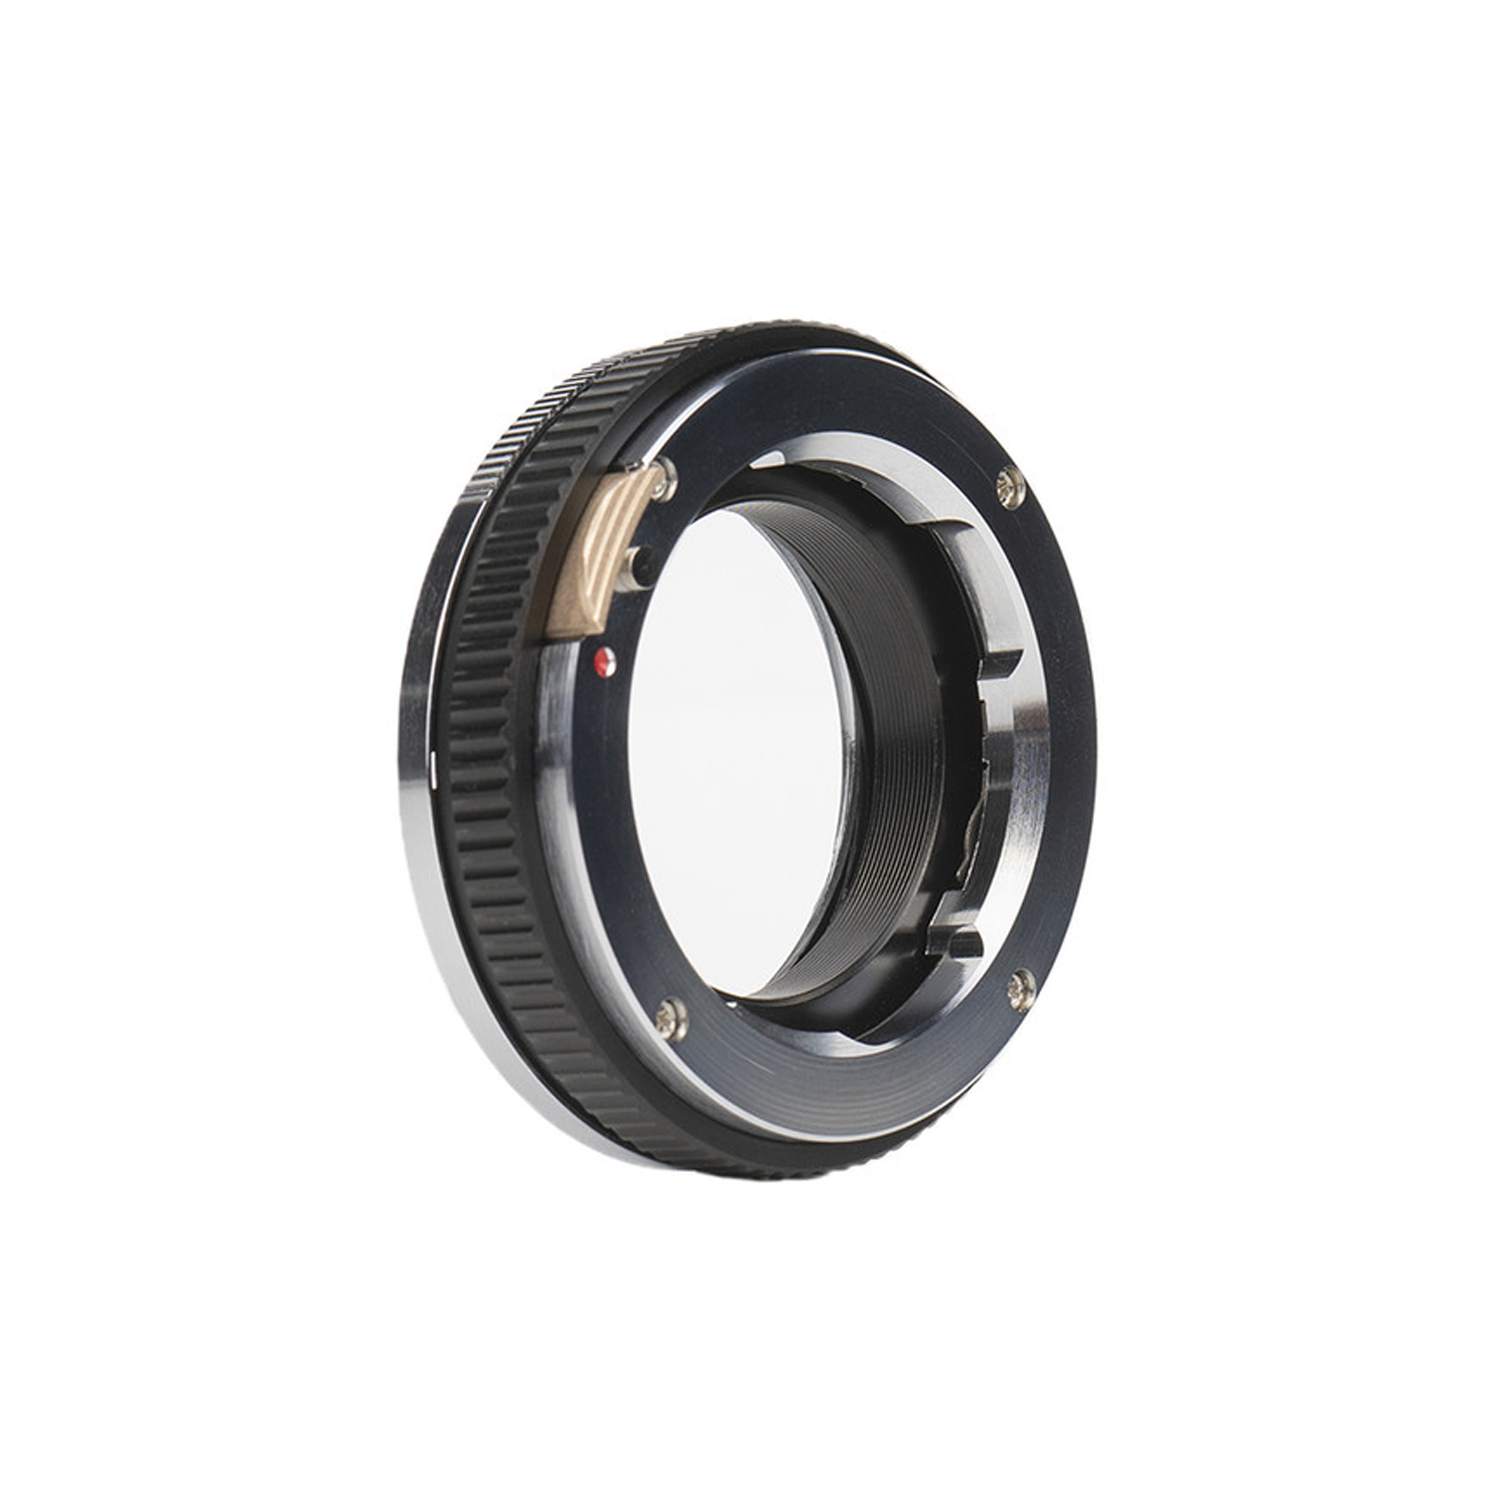 7artisans Photoelectric Close Focus Adapter for Leica M Lens to Sony E Camera